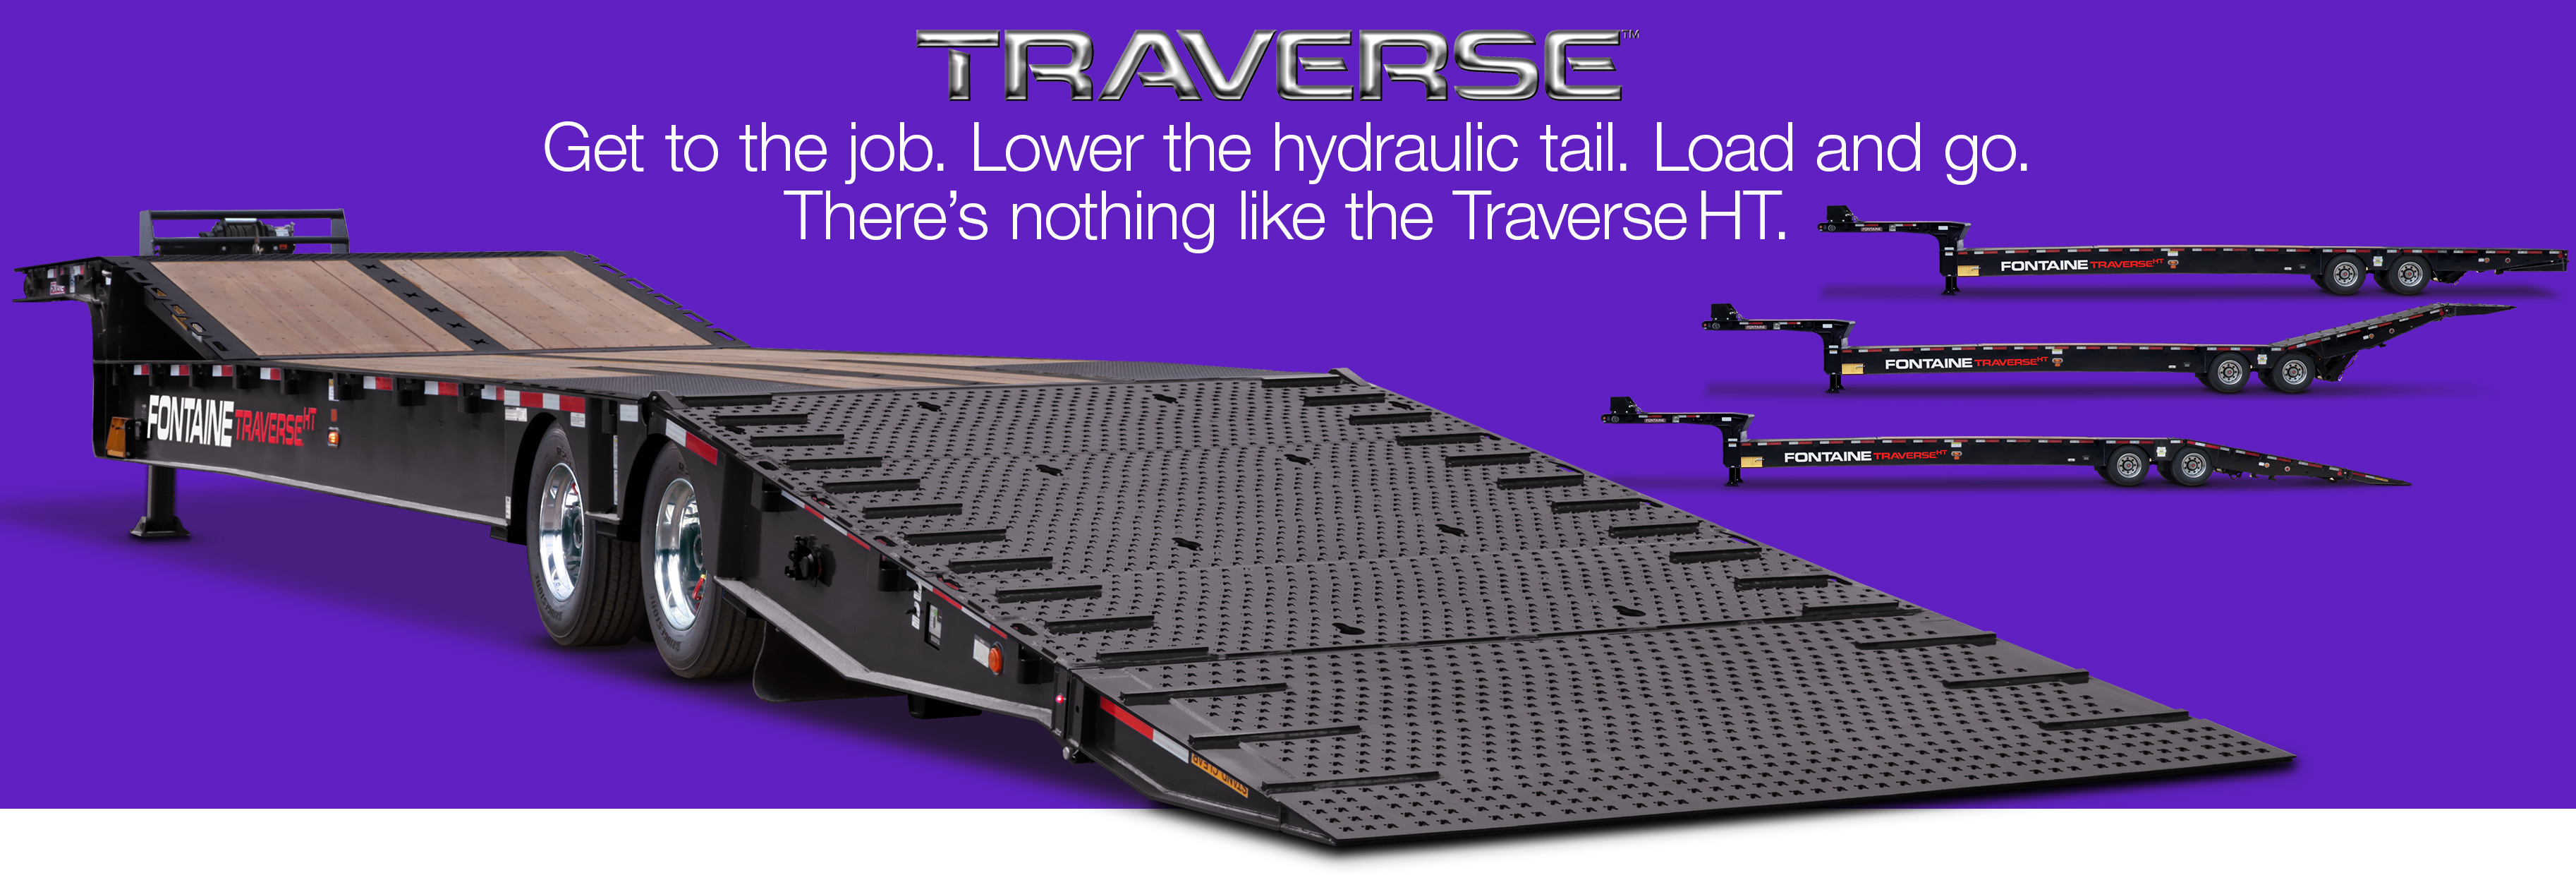 Traverse HT hydraulic tail trailer